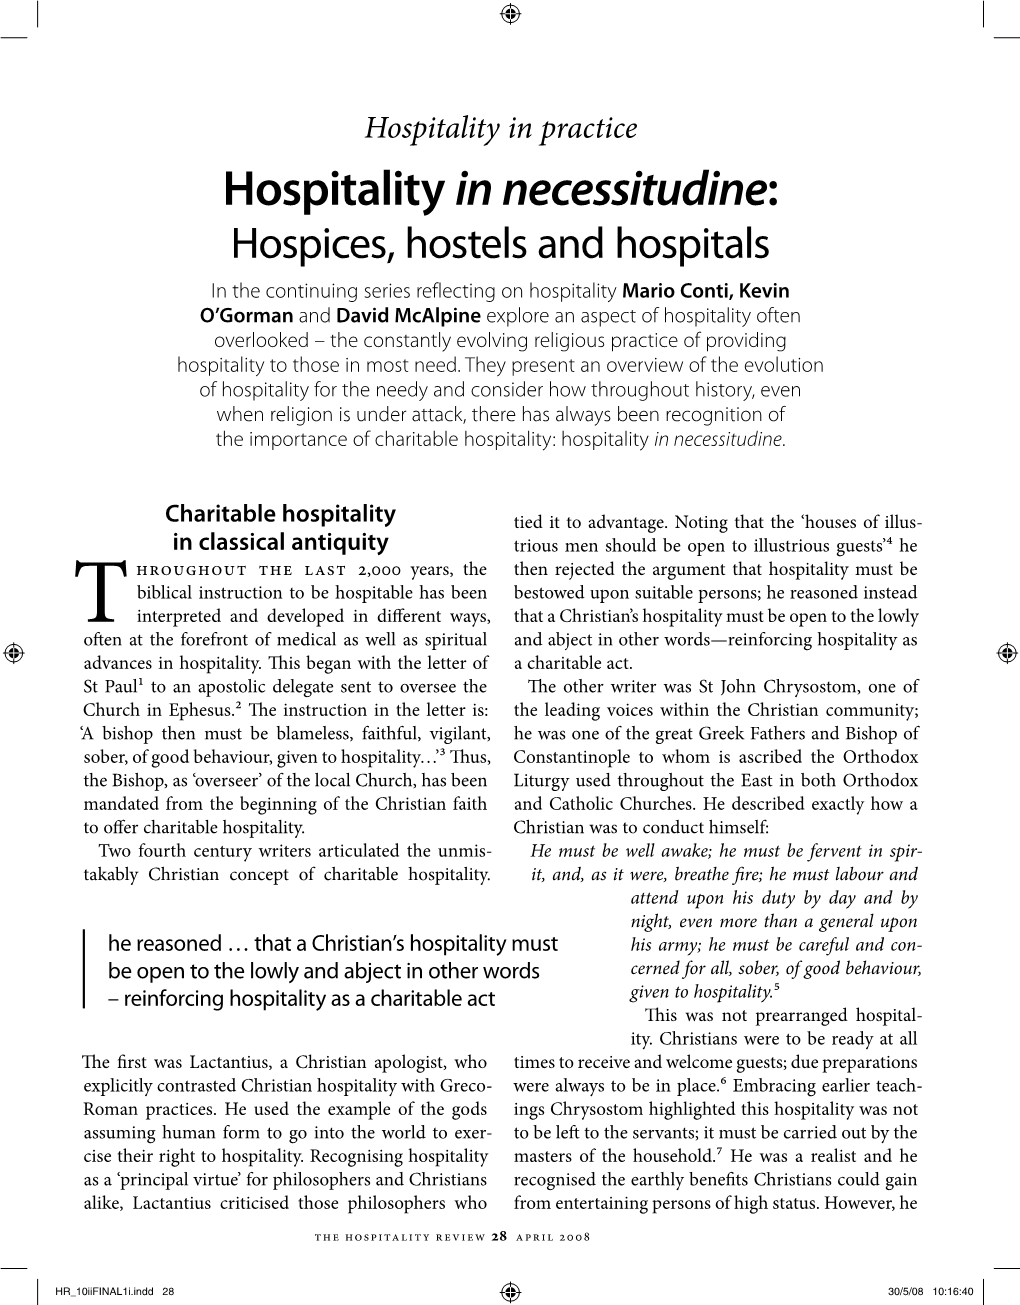 Hospitality in Necessitudine